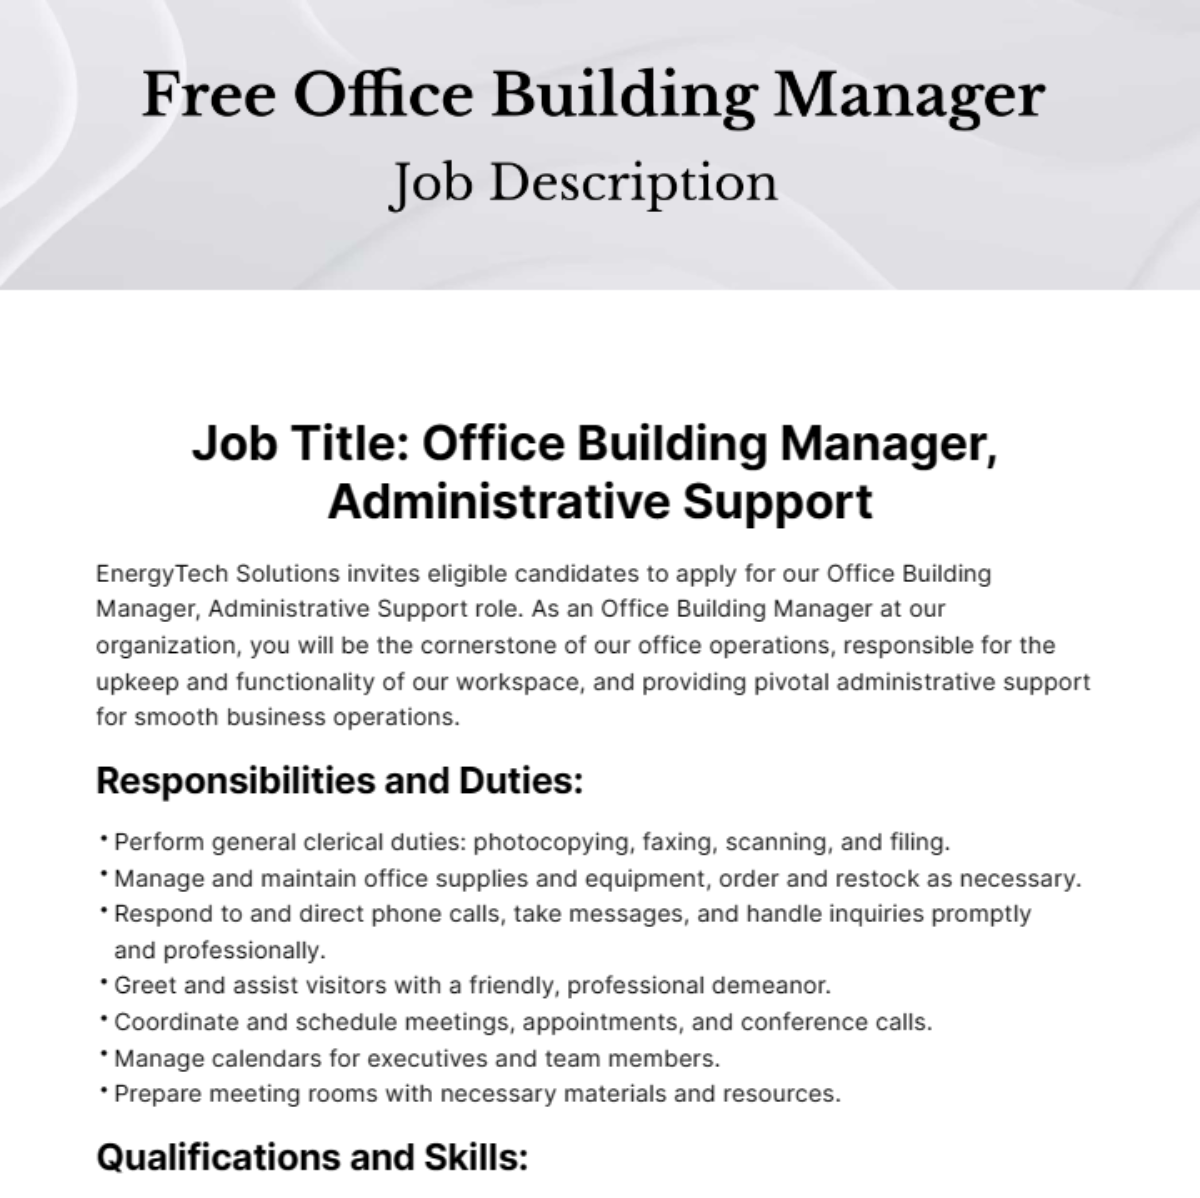 Free Office Building Manager Job Description Template